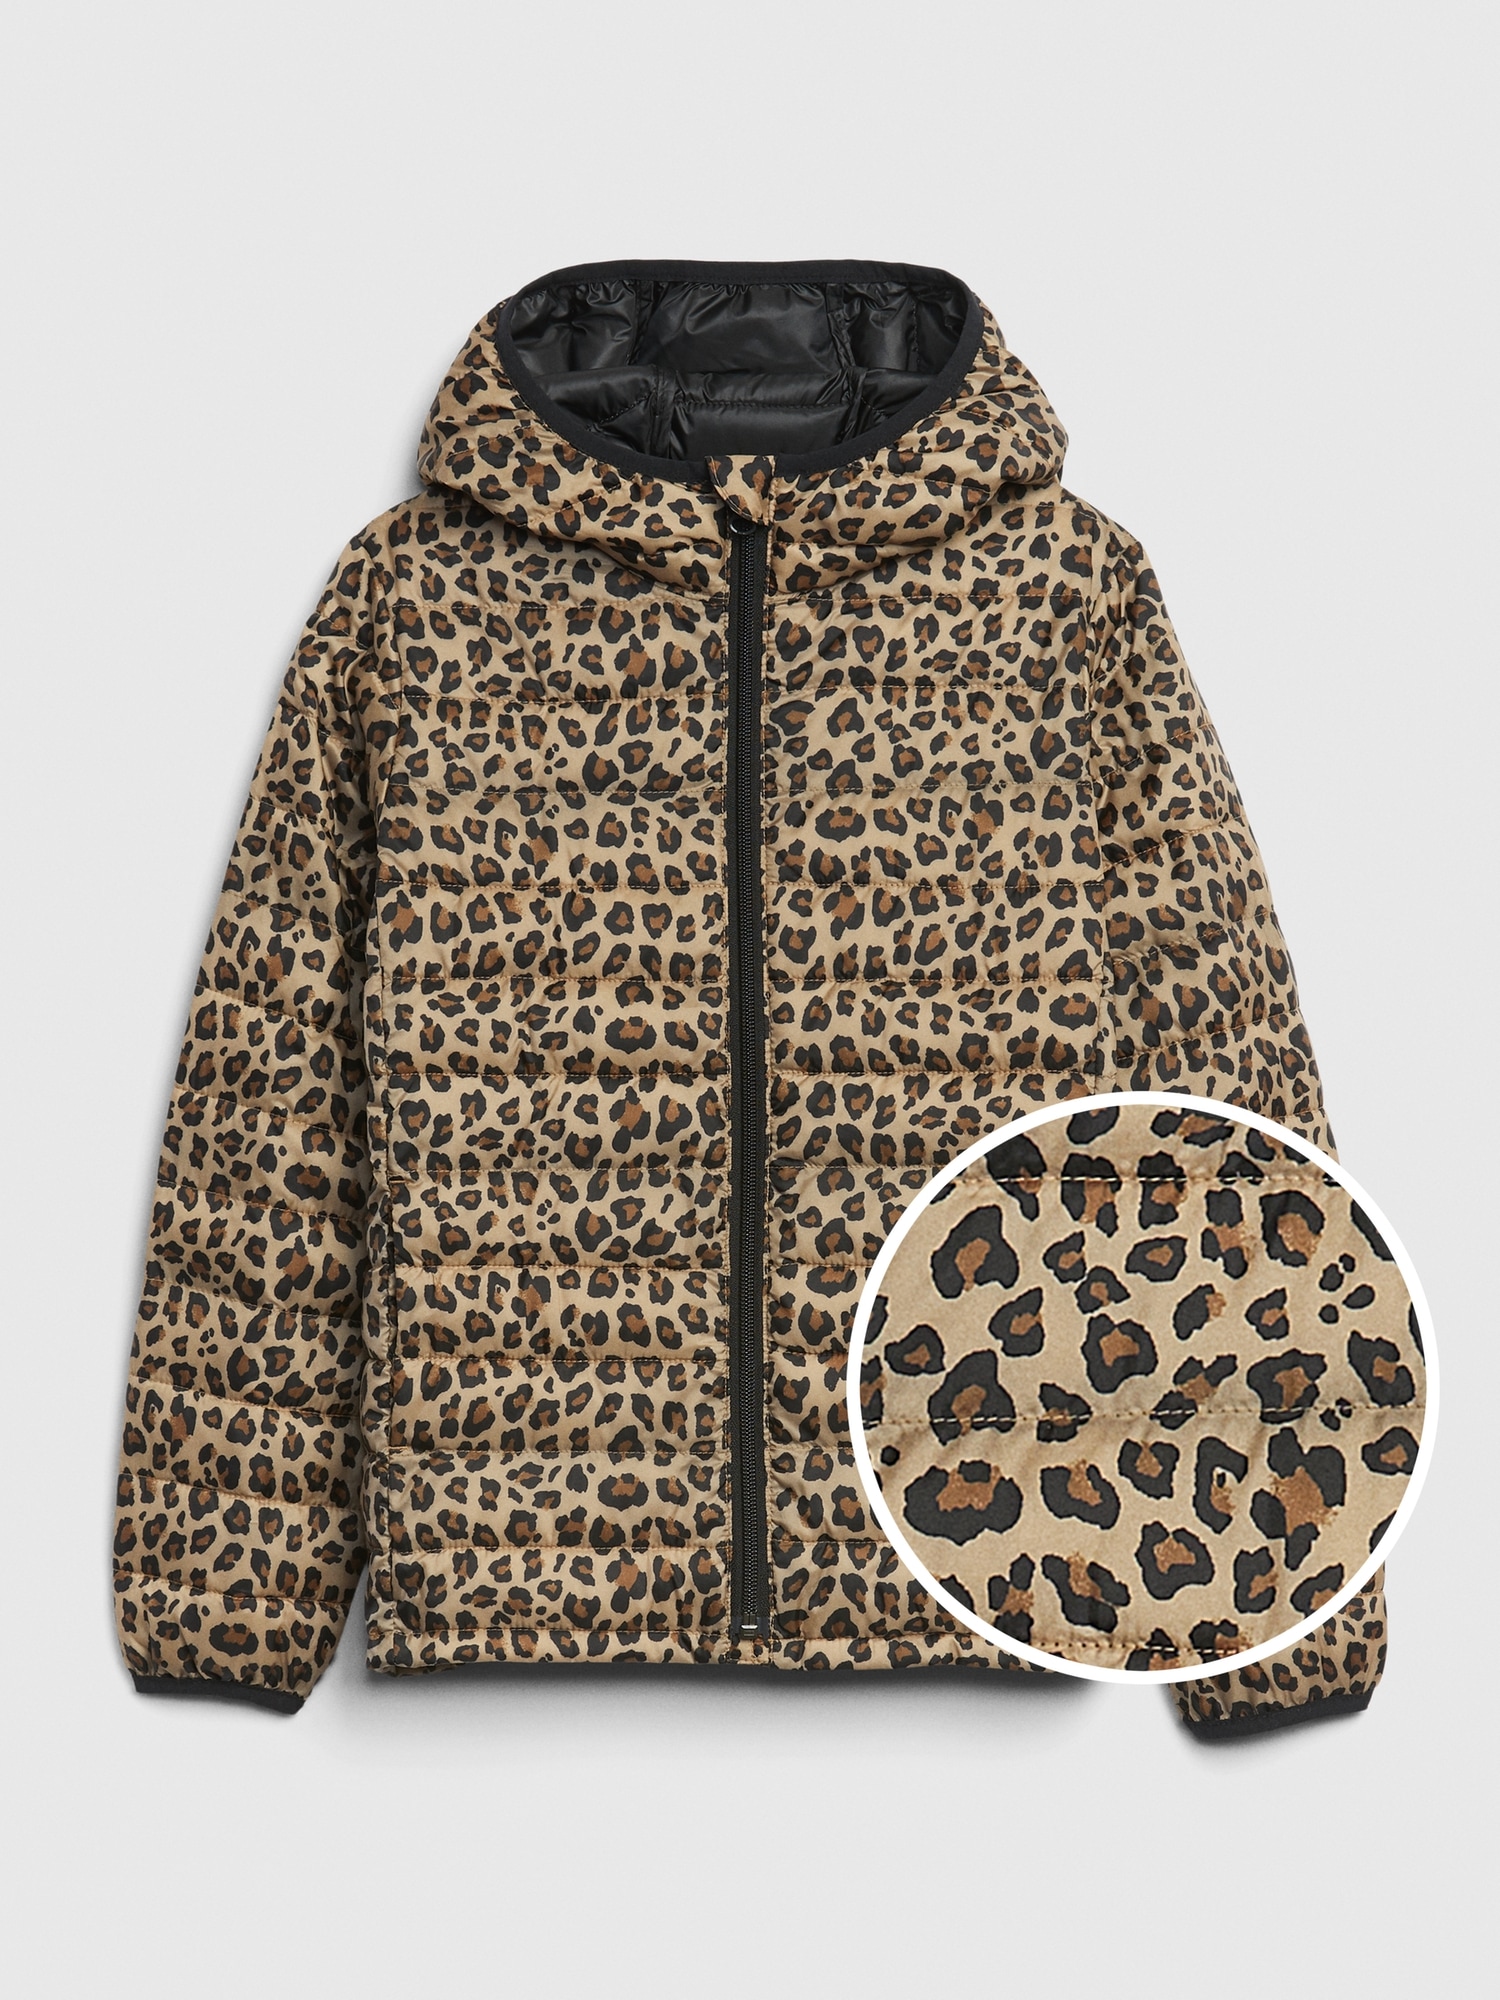 gap leopard jacket